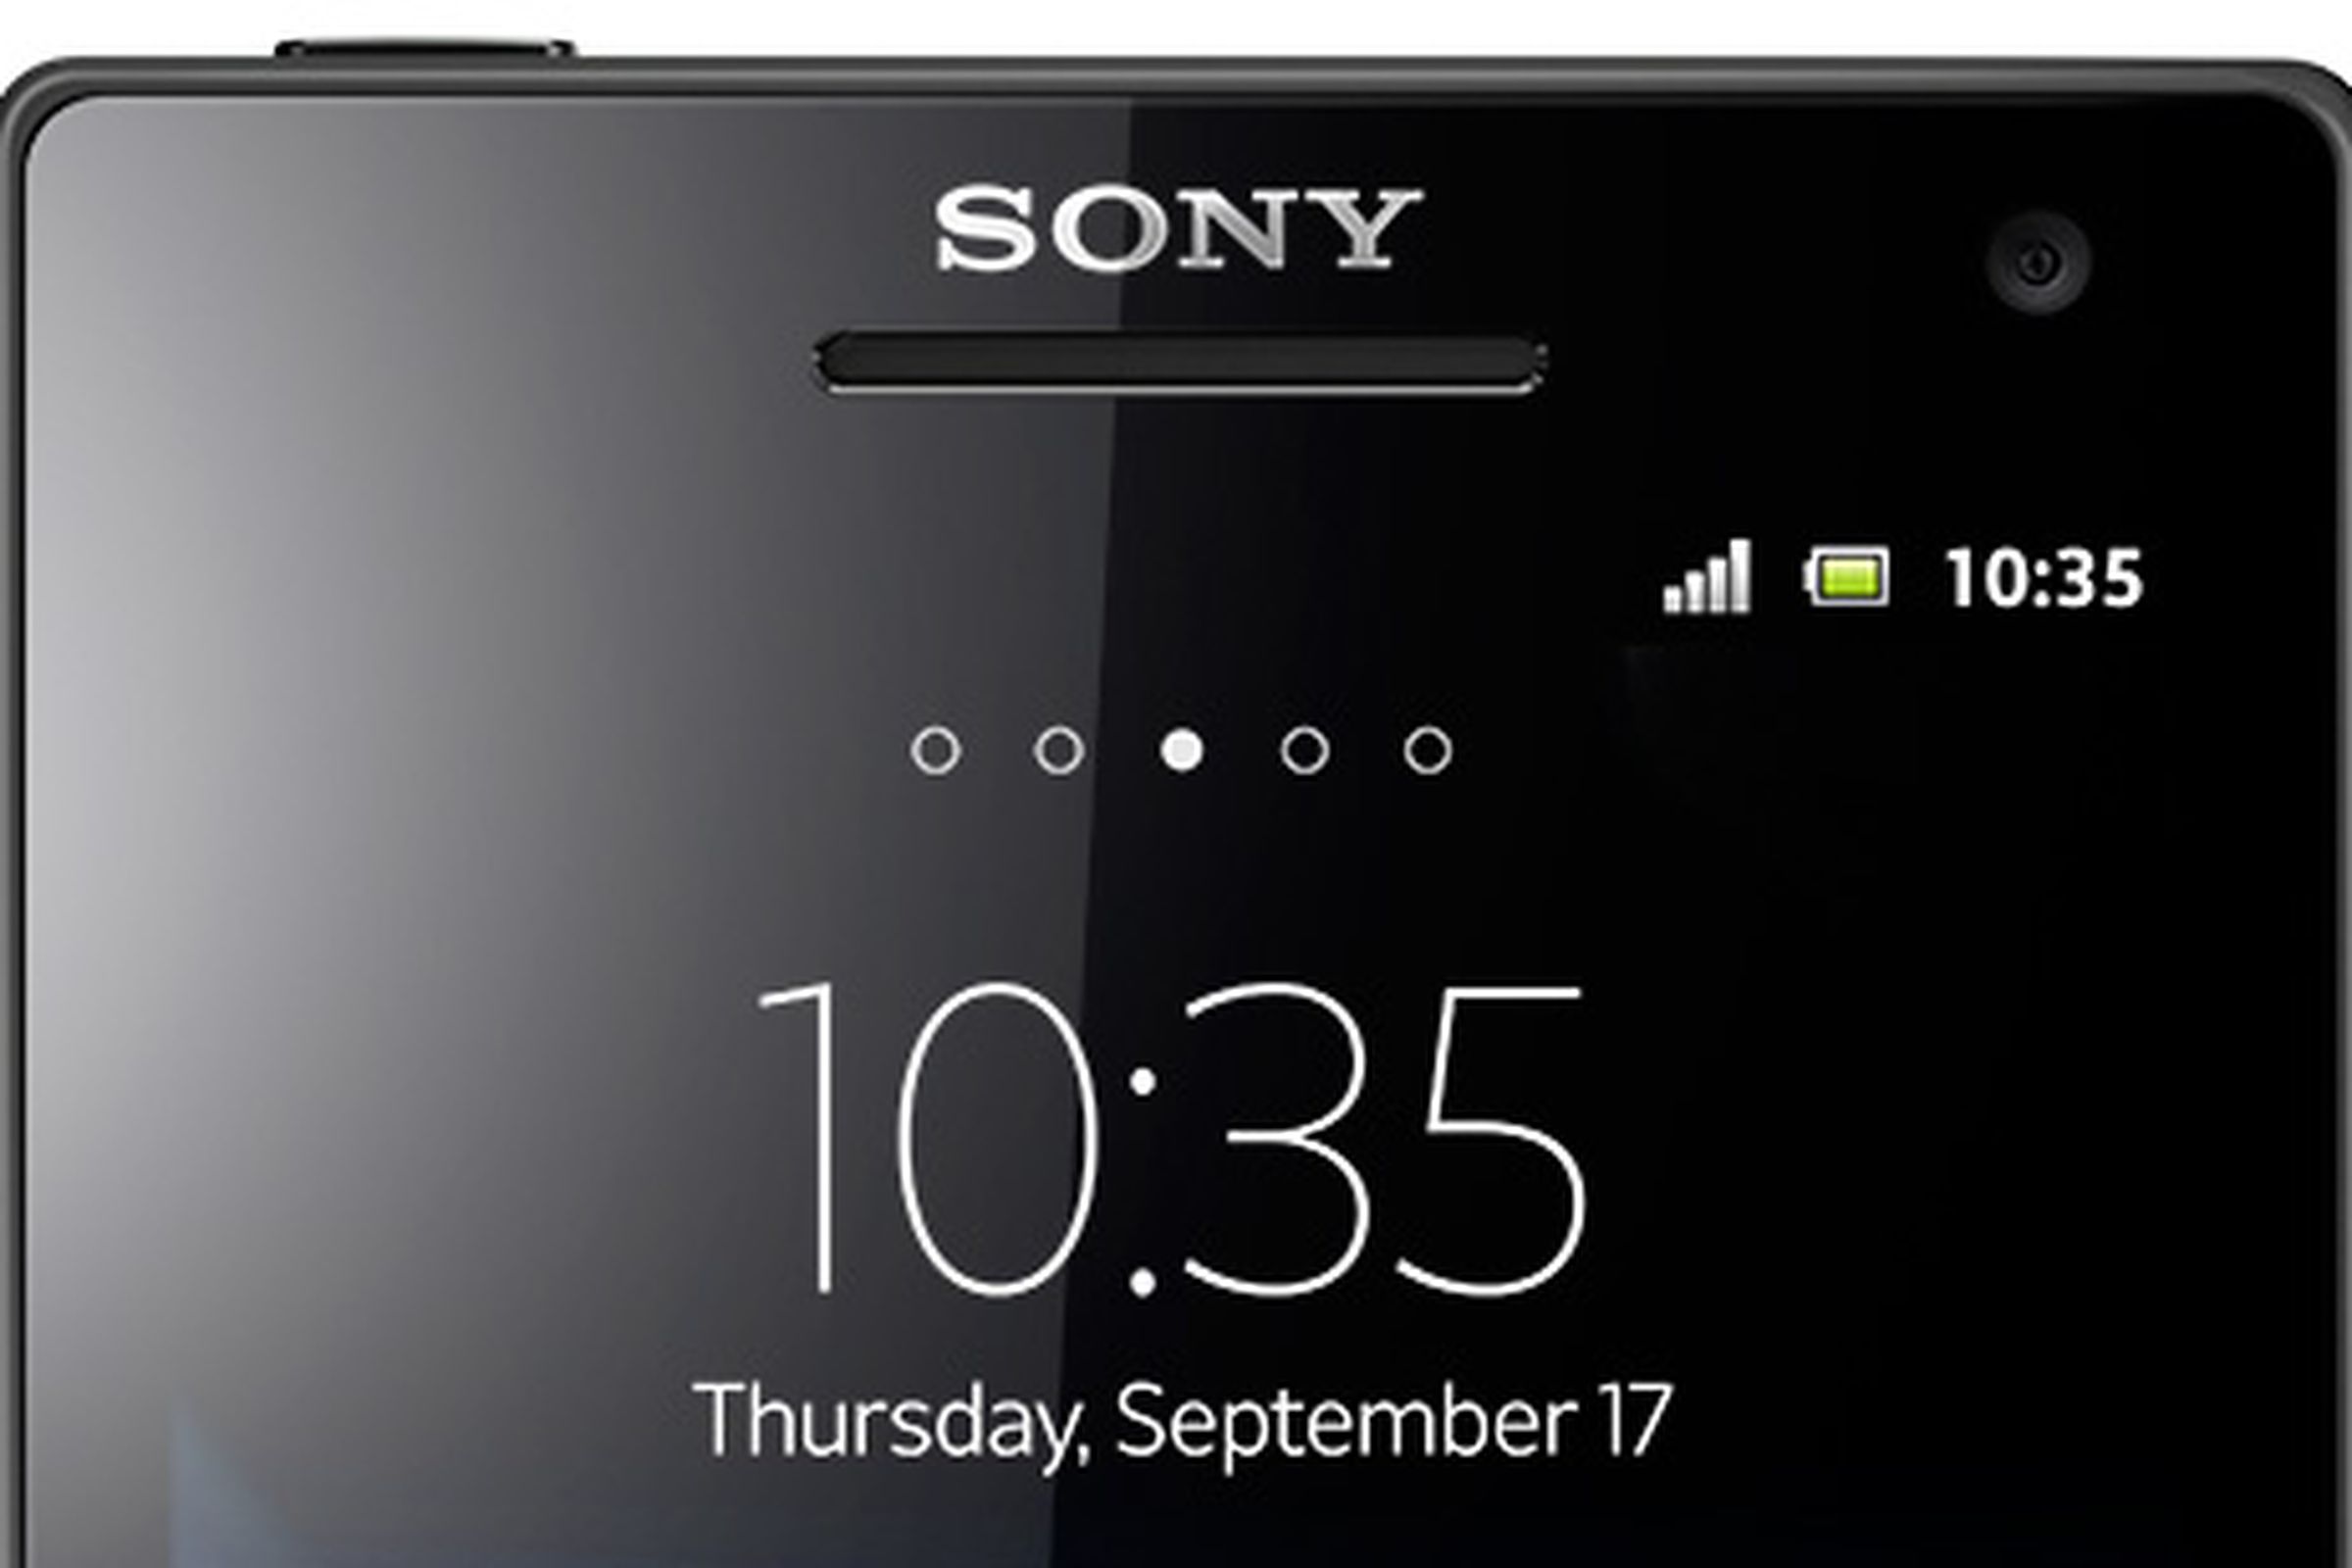 Sony logo on phone